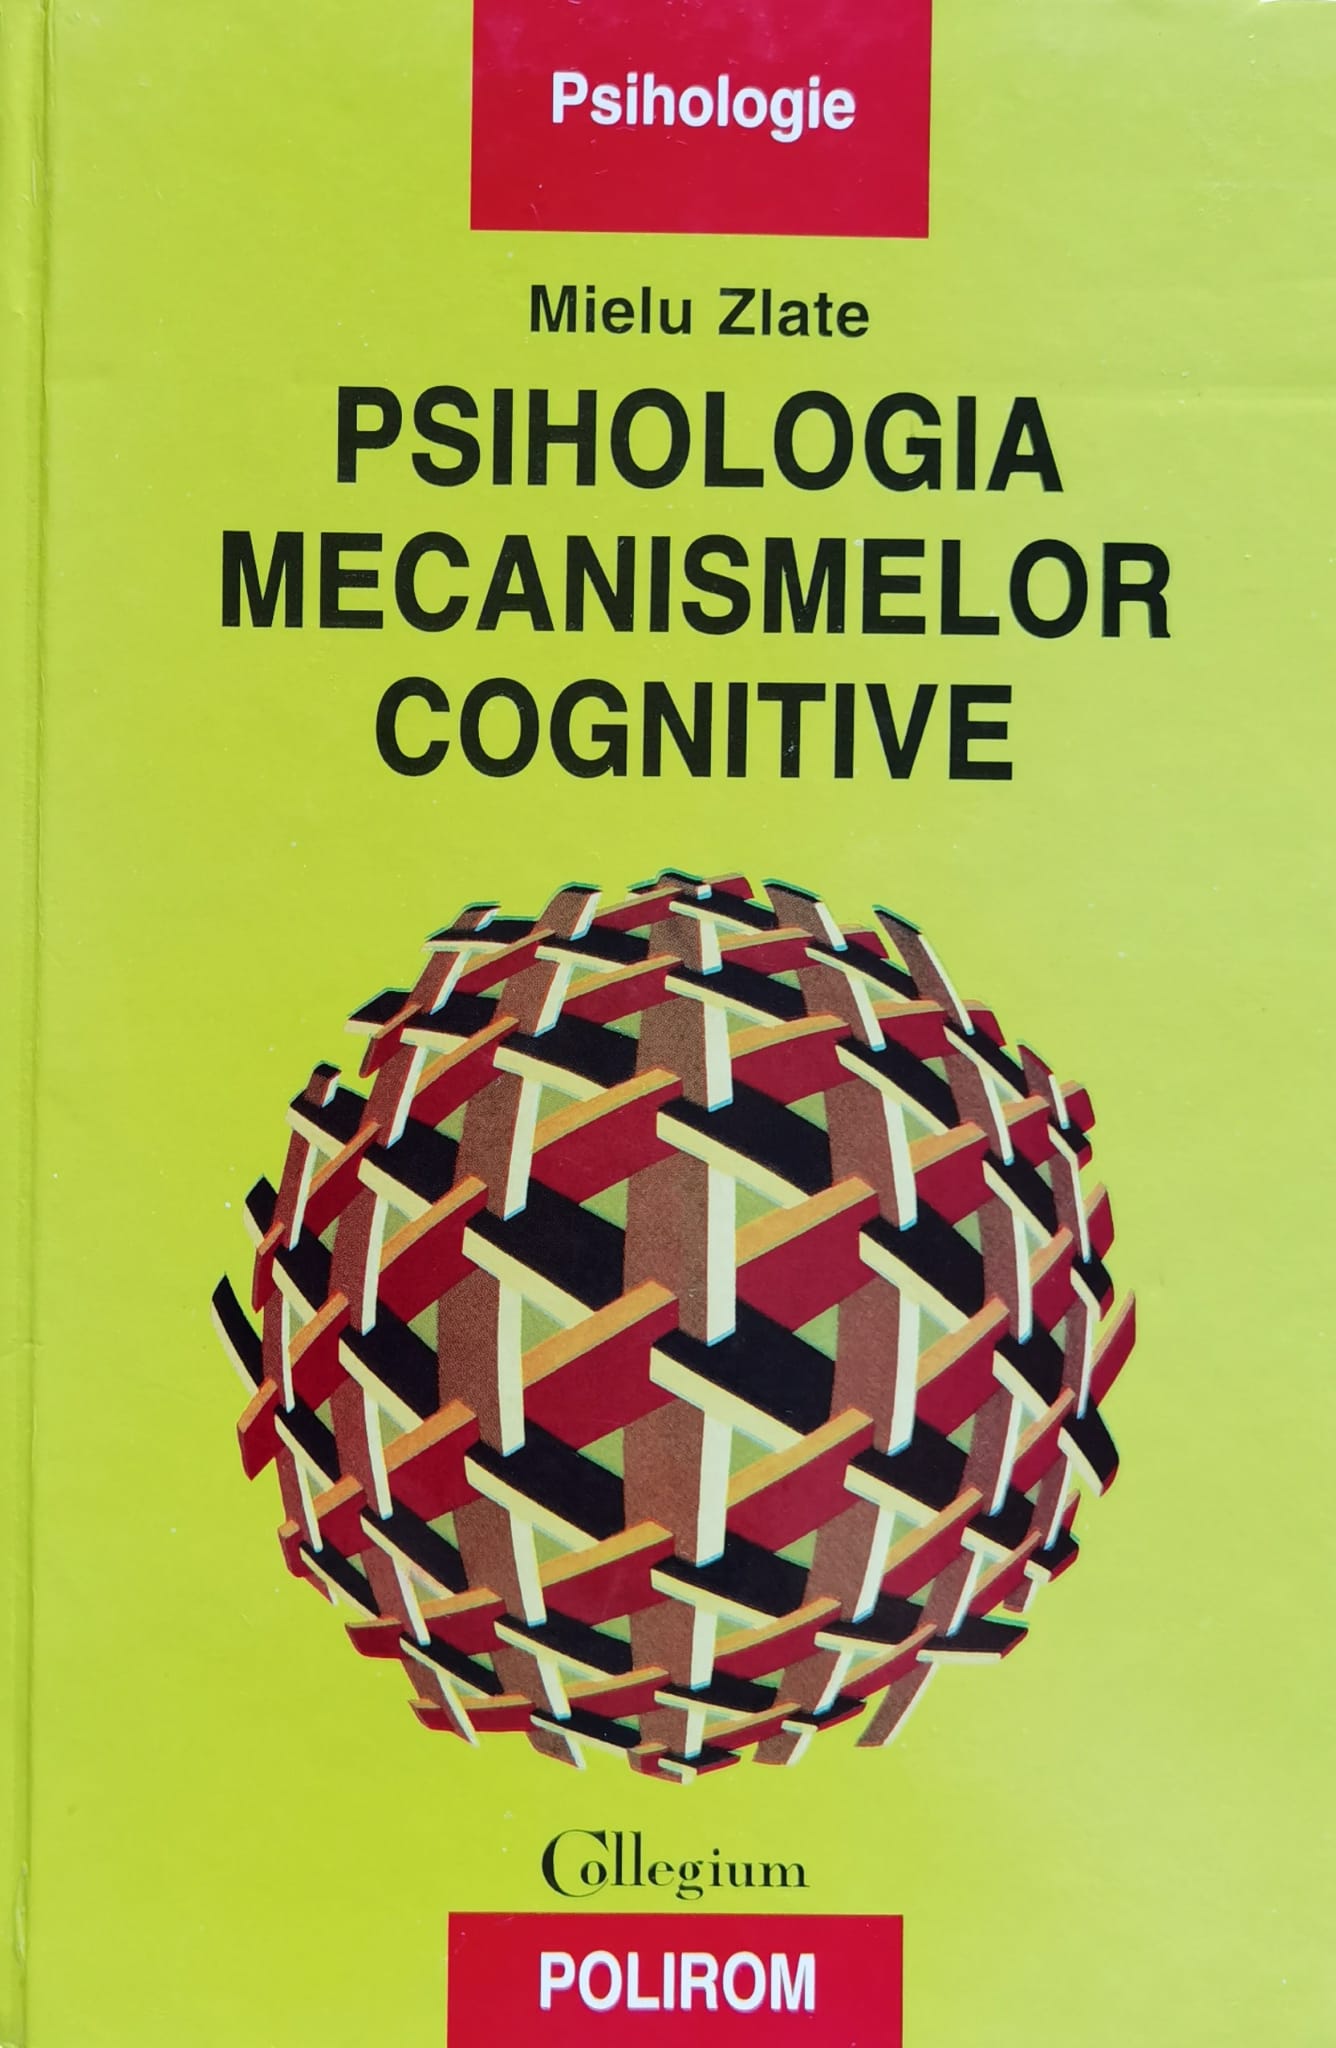 psihologia mecanismelor cognitive                                                                    mielu zlate                                                                                         